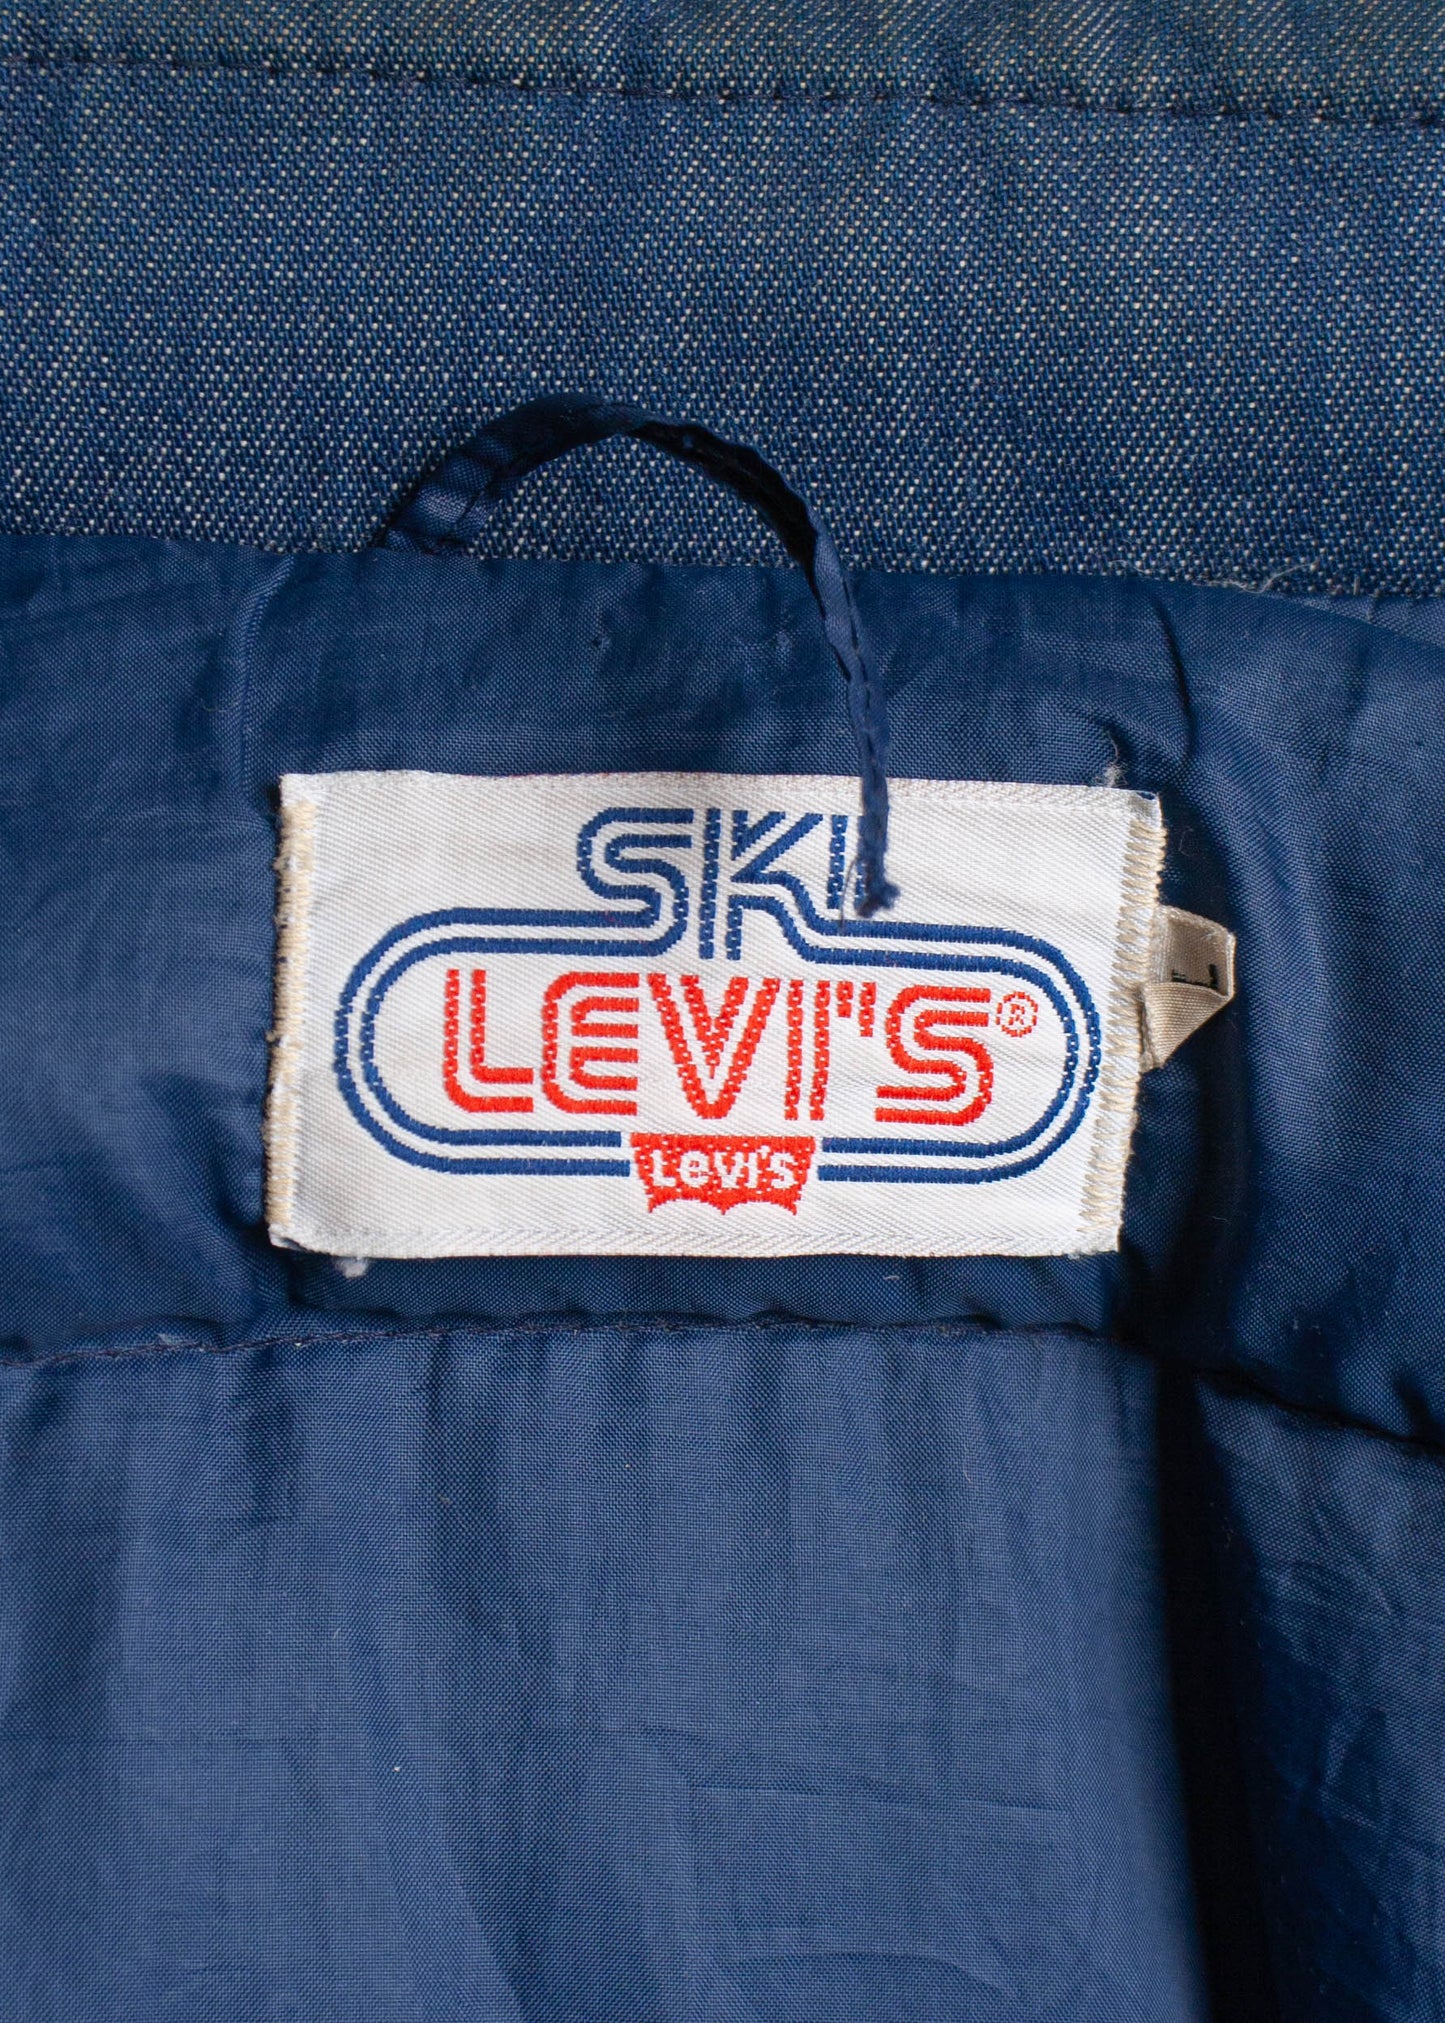 1970s Levi's Ski Denim Jacket Size L/XL